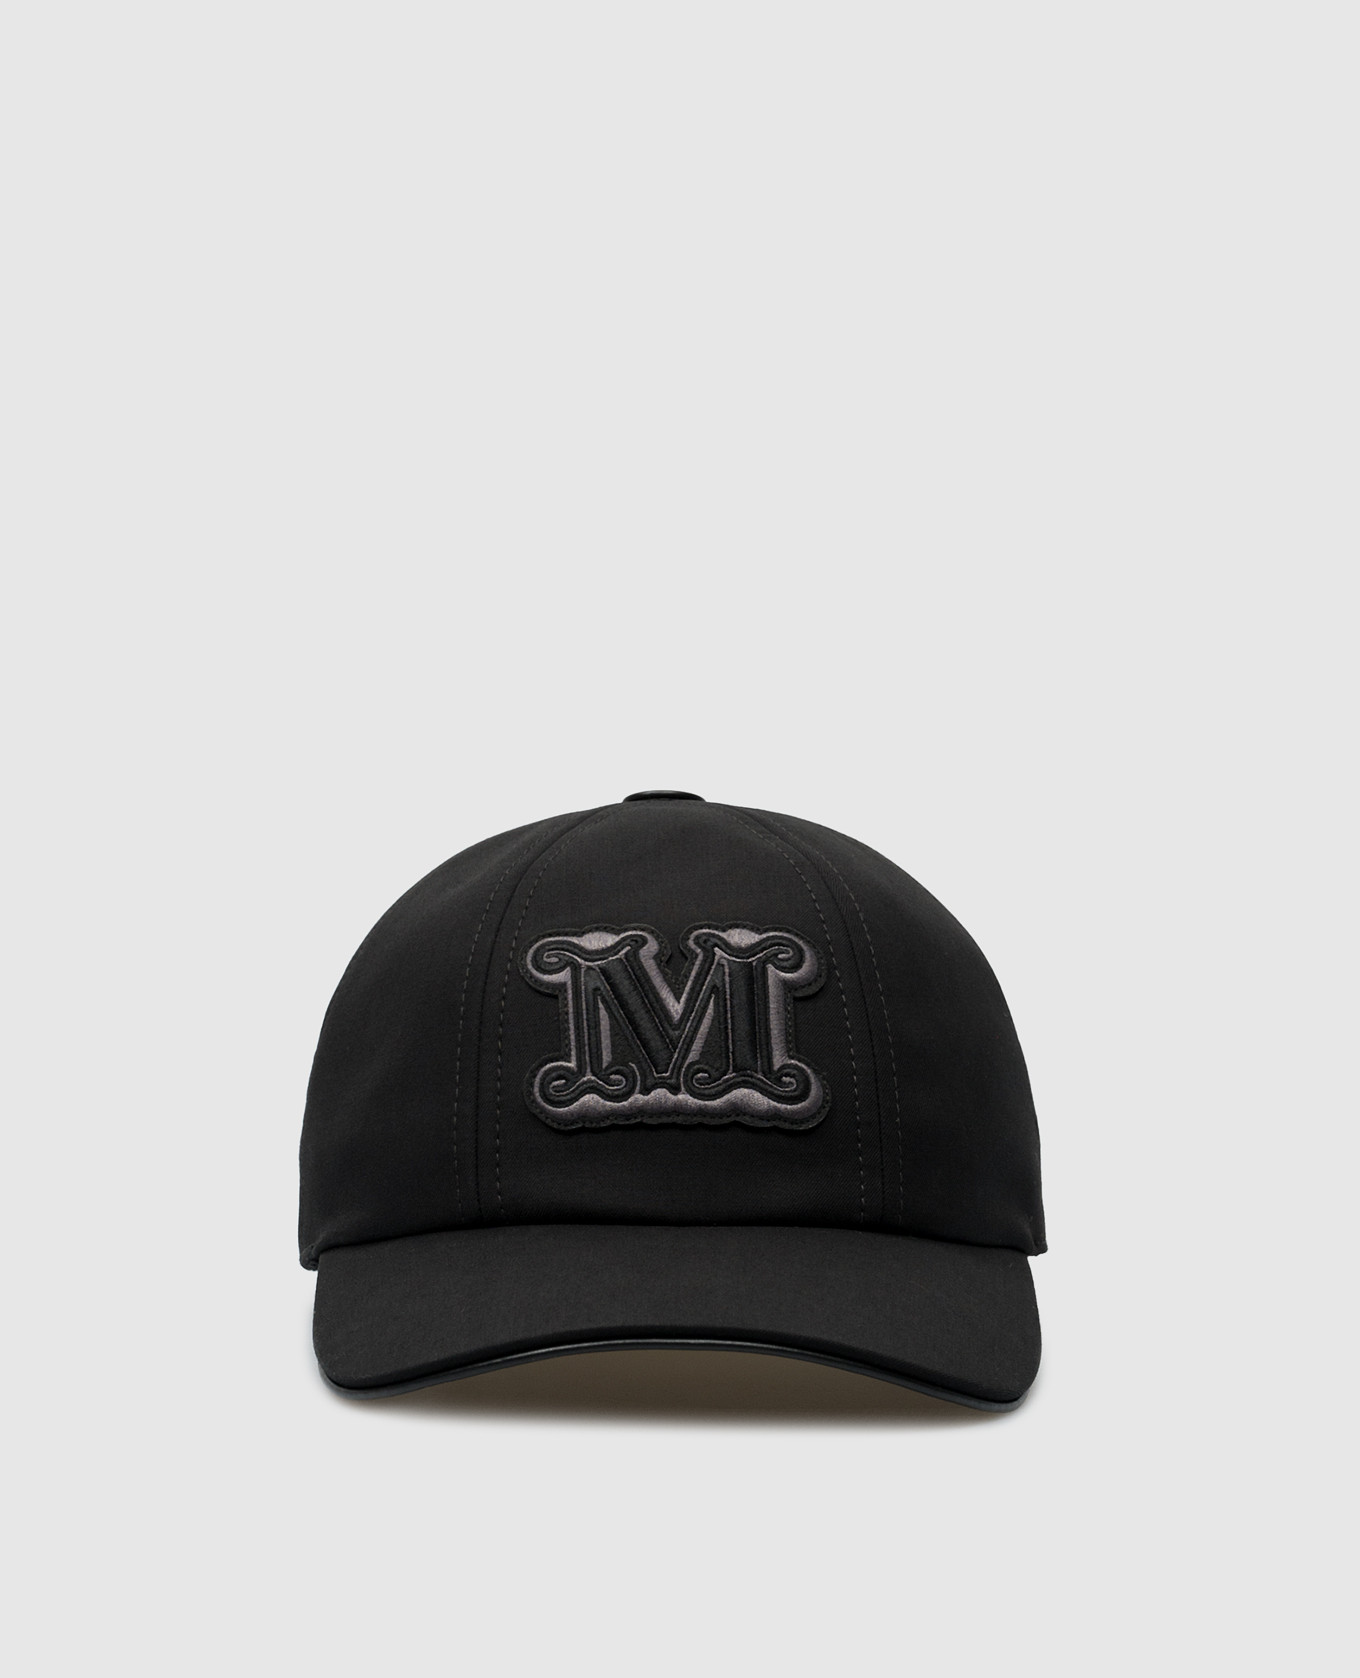 LIBERO black cap with logo